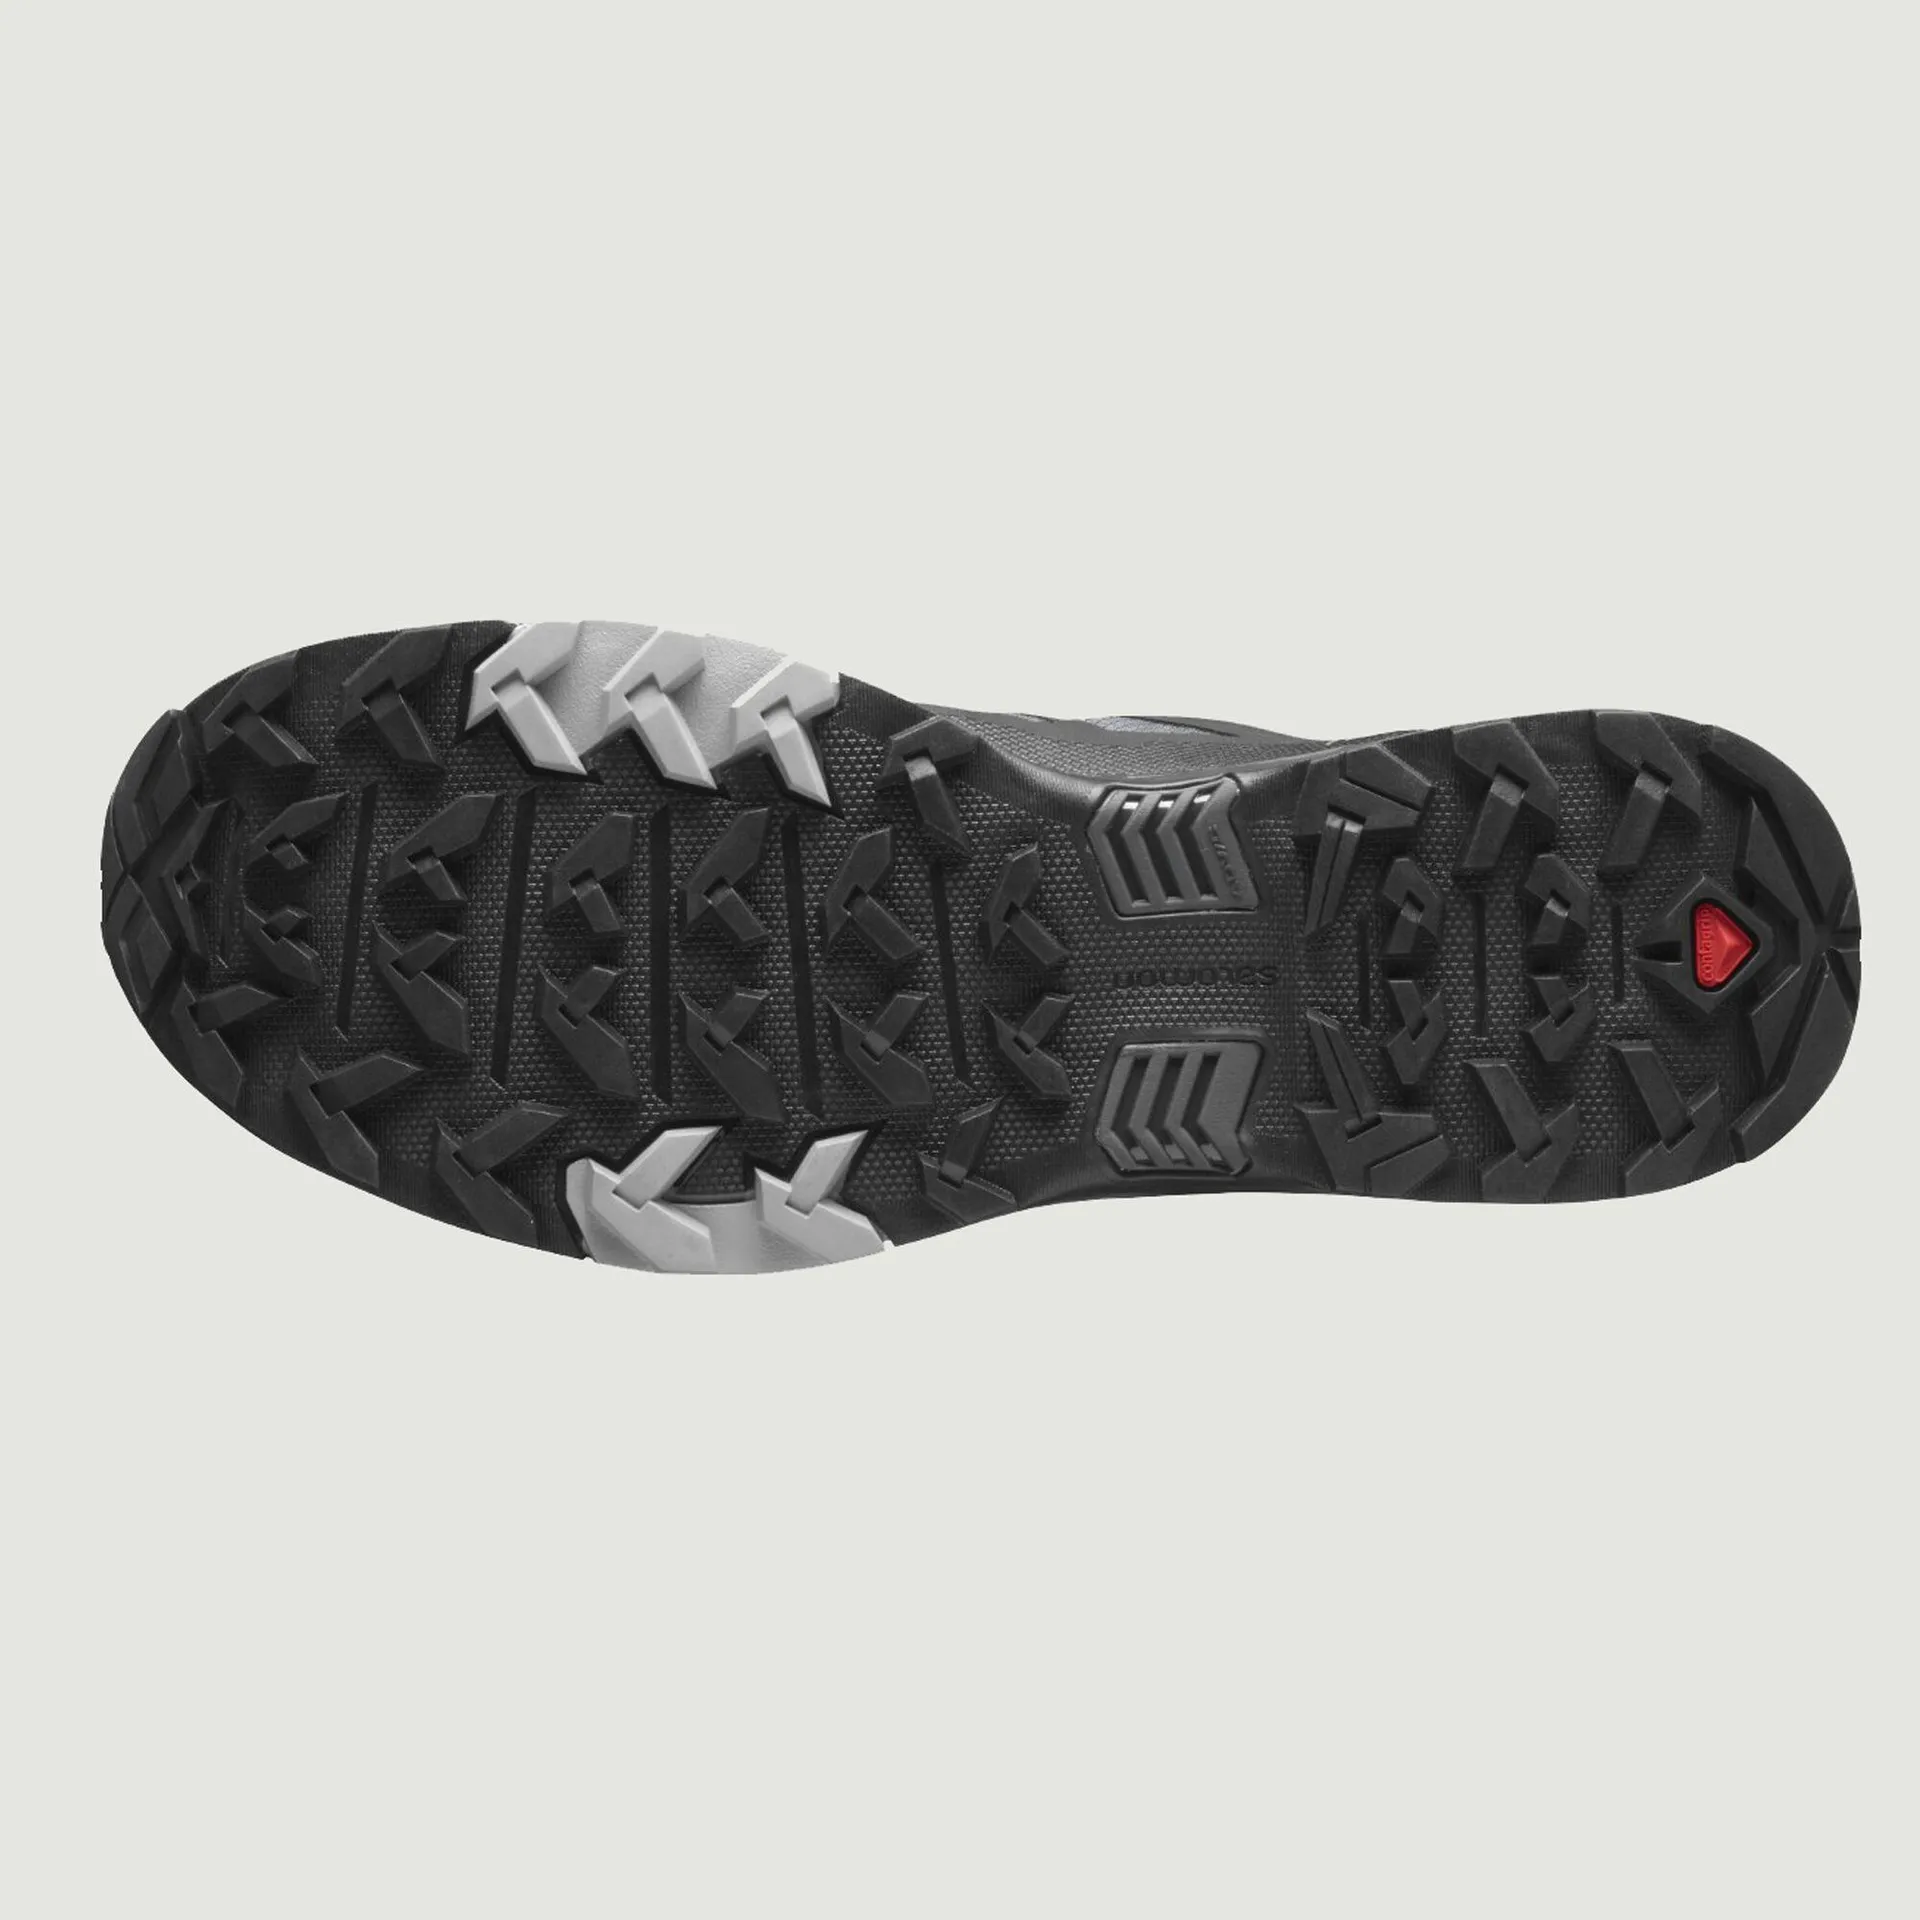 Salomon X Ultra 4 Wide GTX Men's Hiking Shoes